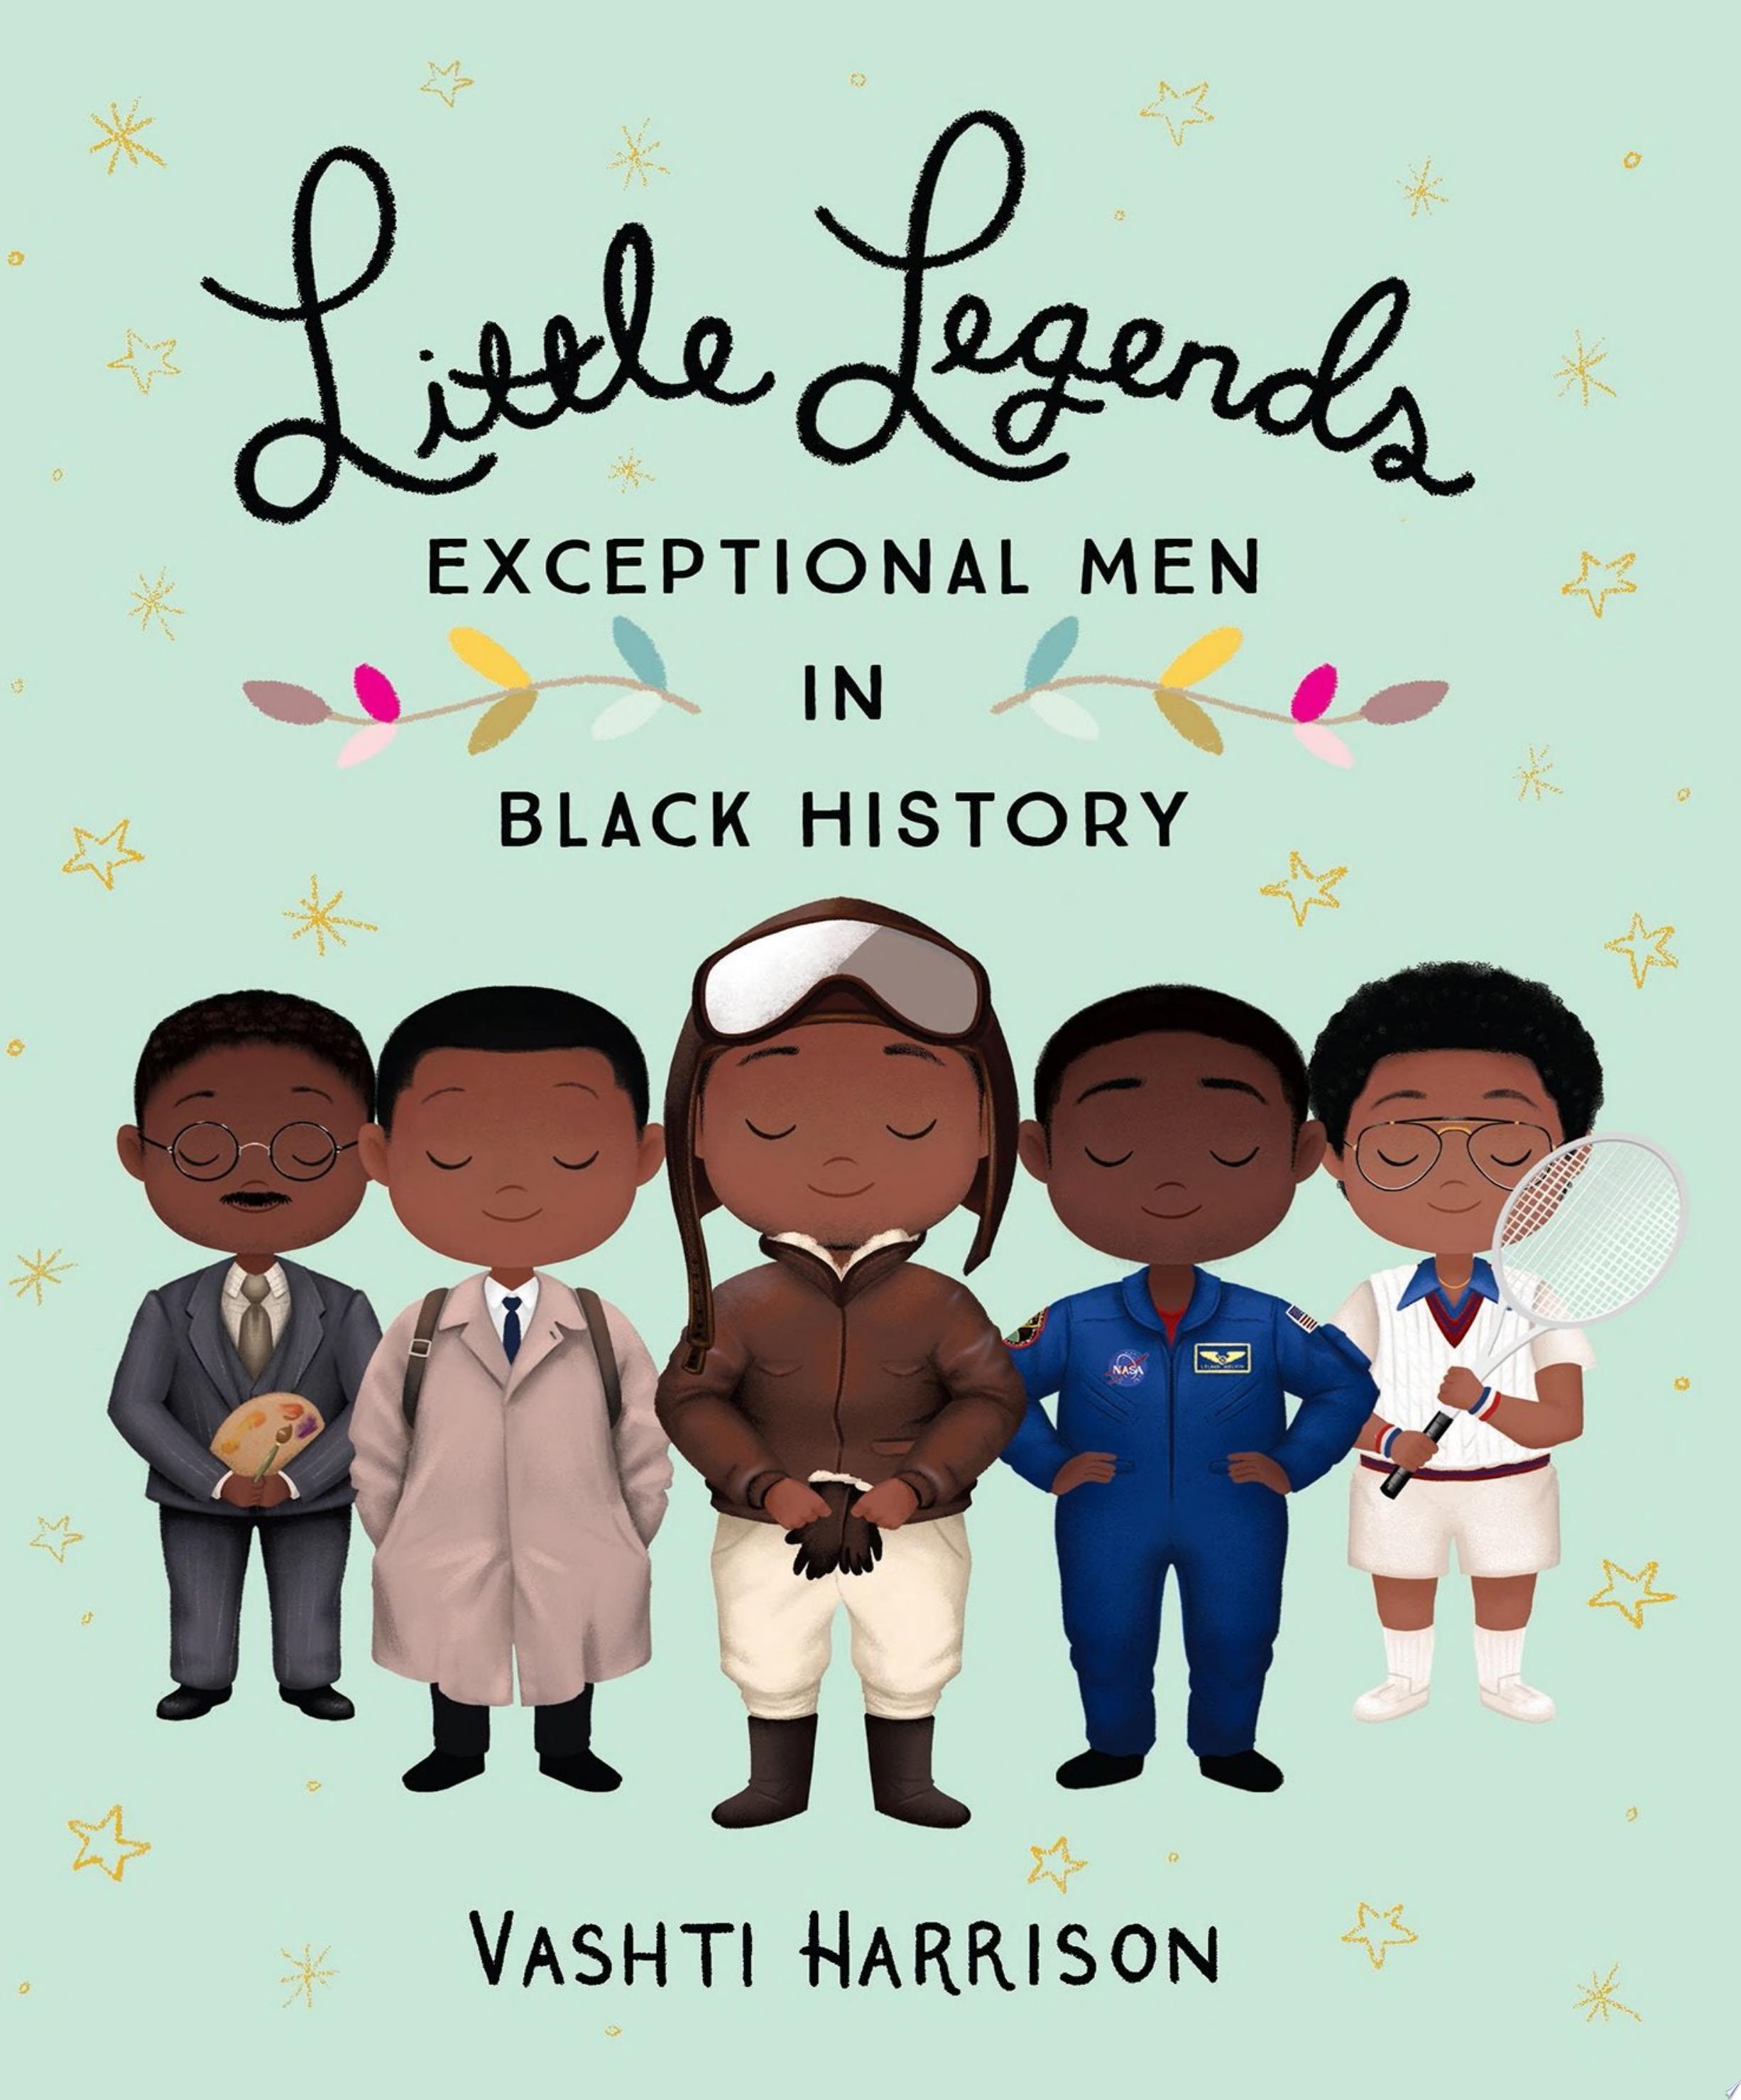 Image for "Little Legends: Exceptional Men in Black History"